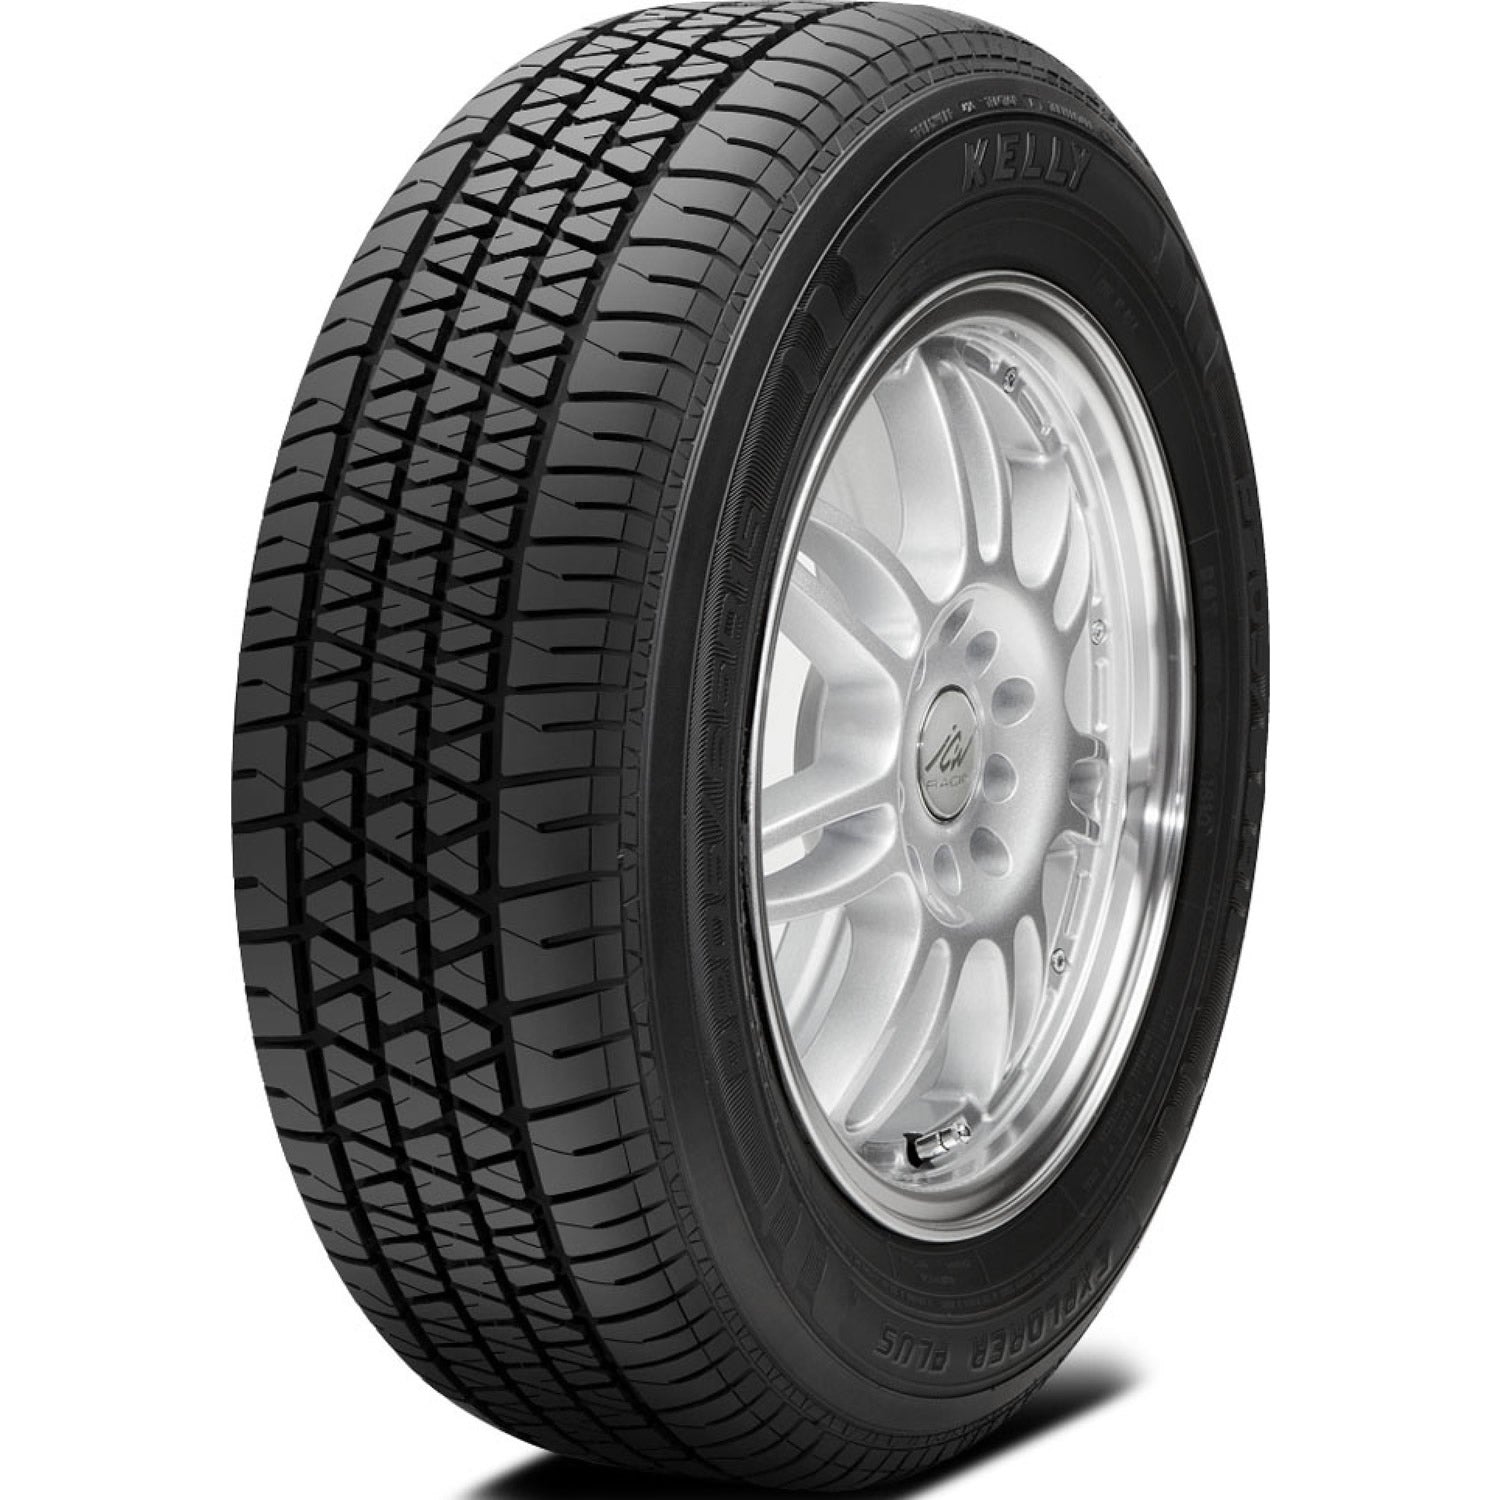 KELLY EXPLORER PLUS 205/60R15 (24.7X8.2R 15) Tires